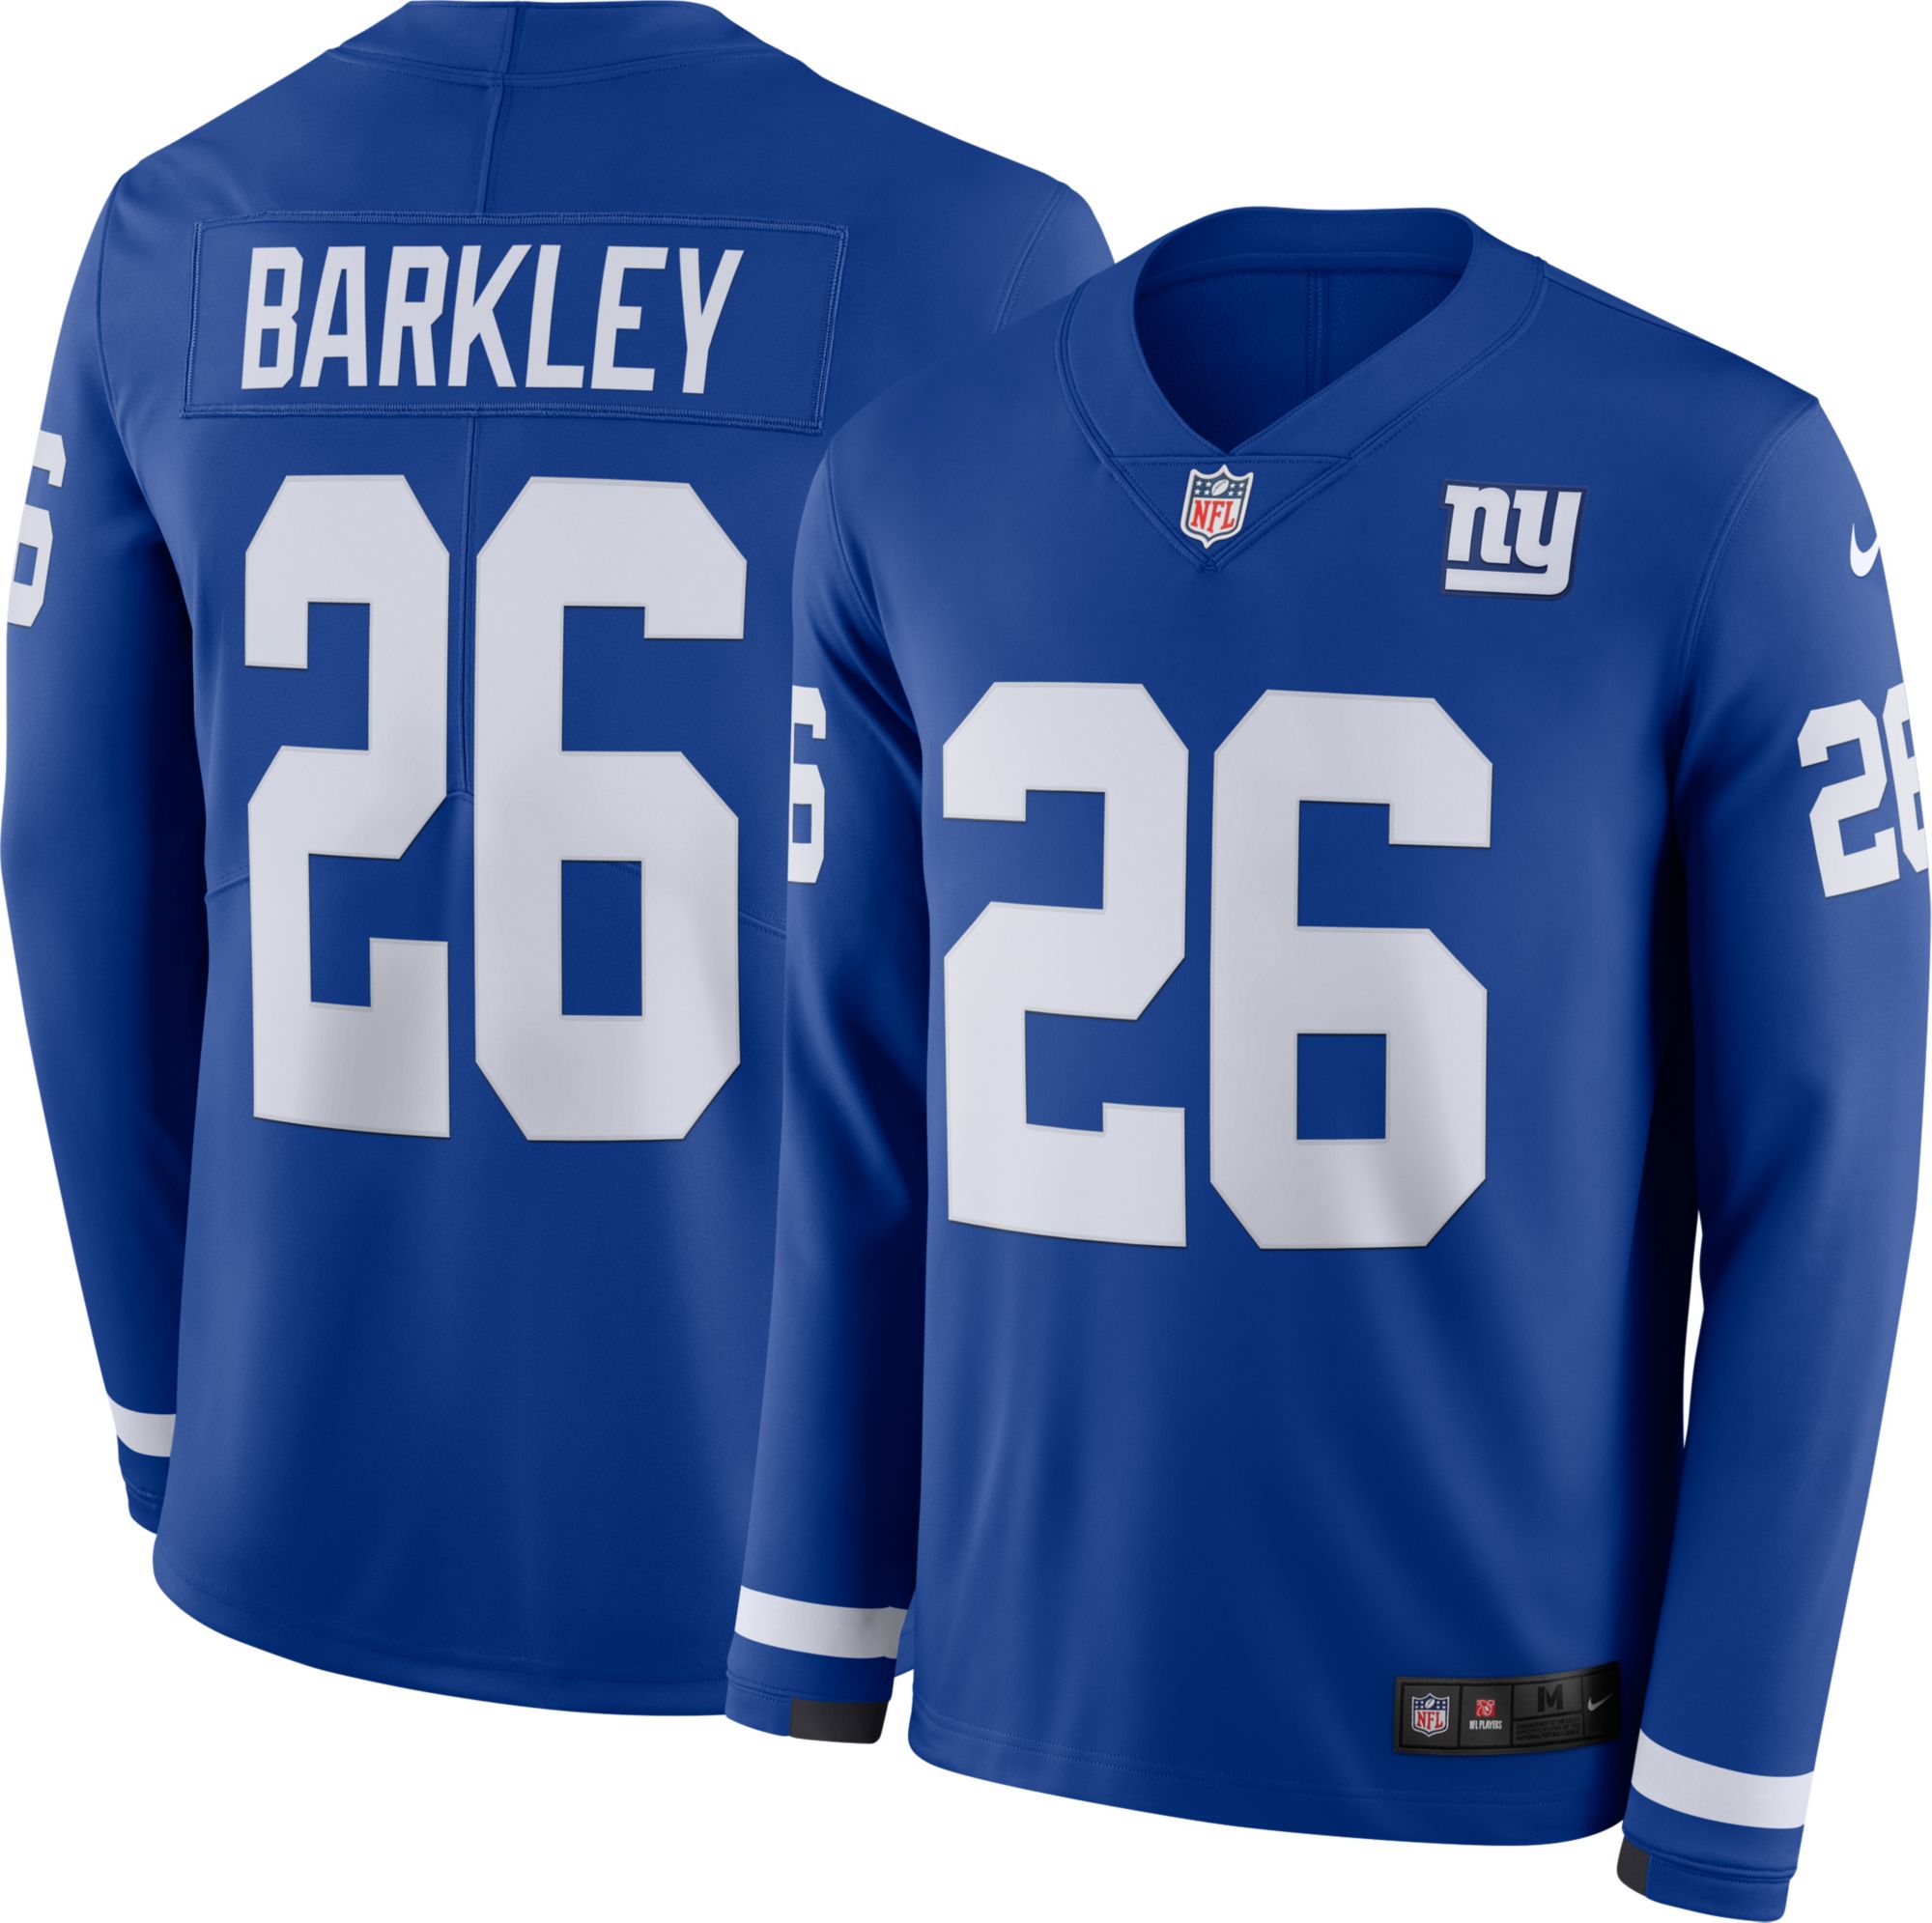 barkley 26 jersey